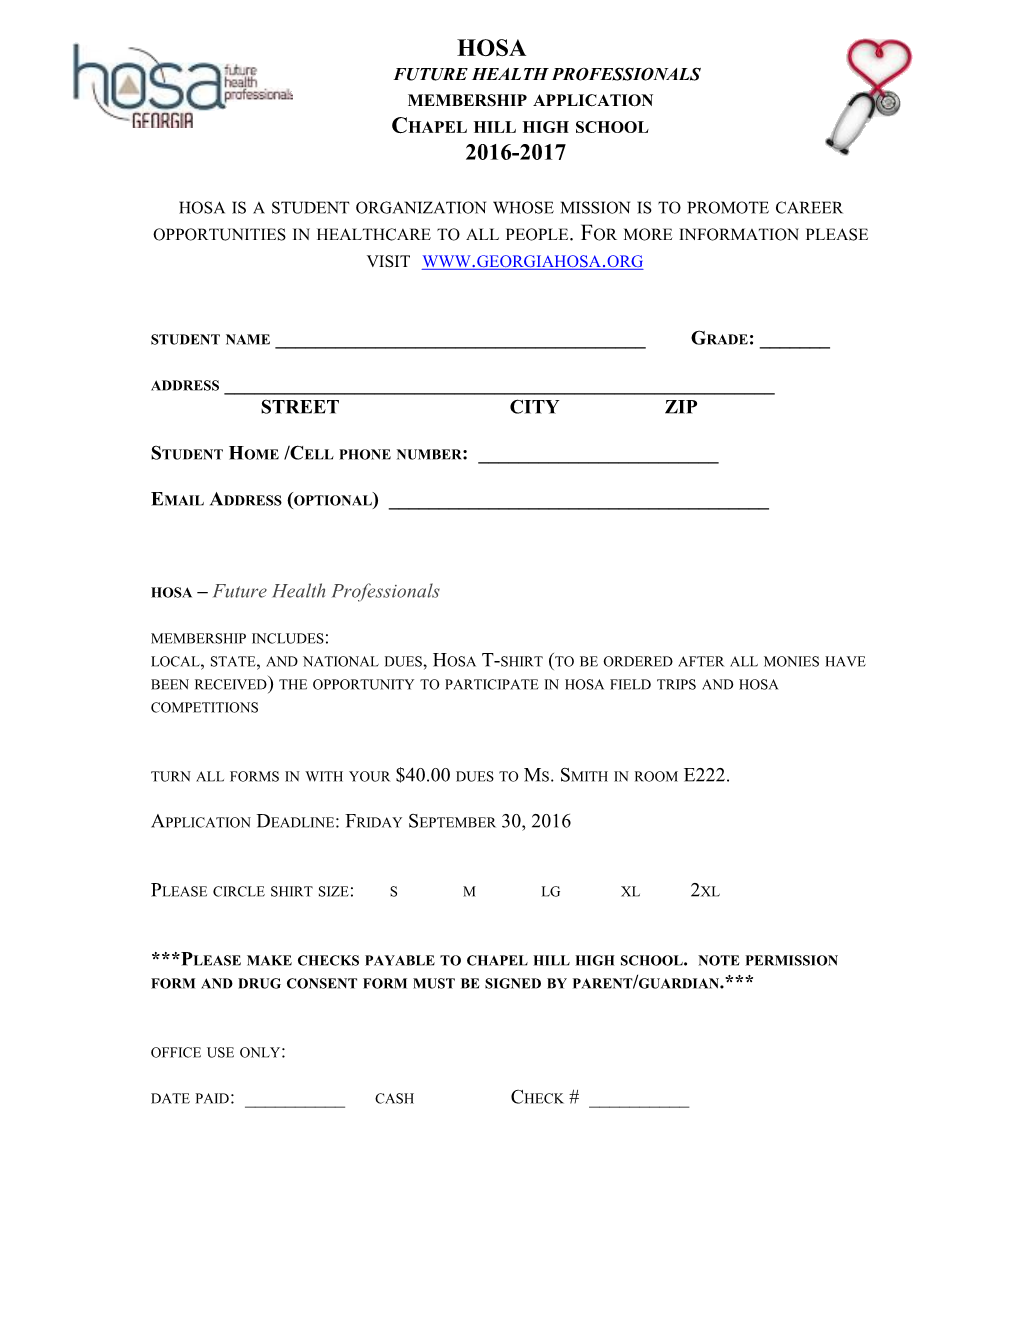 Membership Application for Hosa